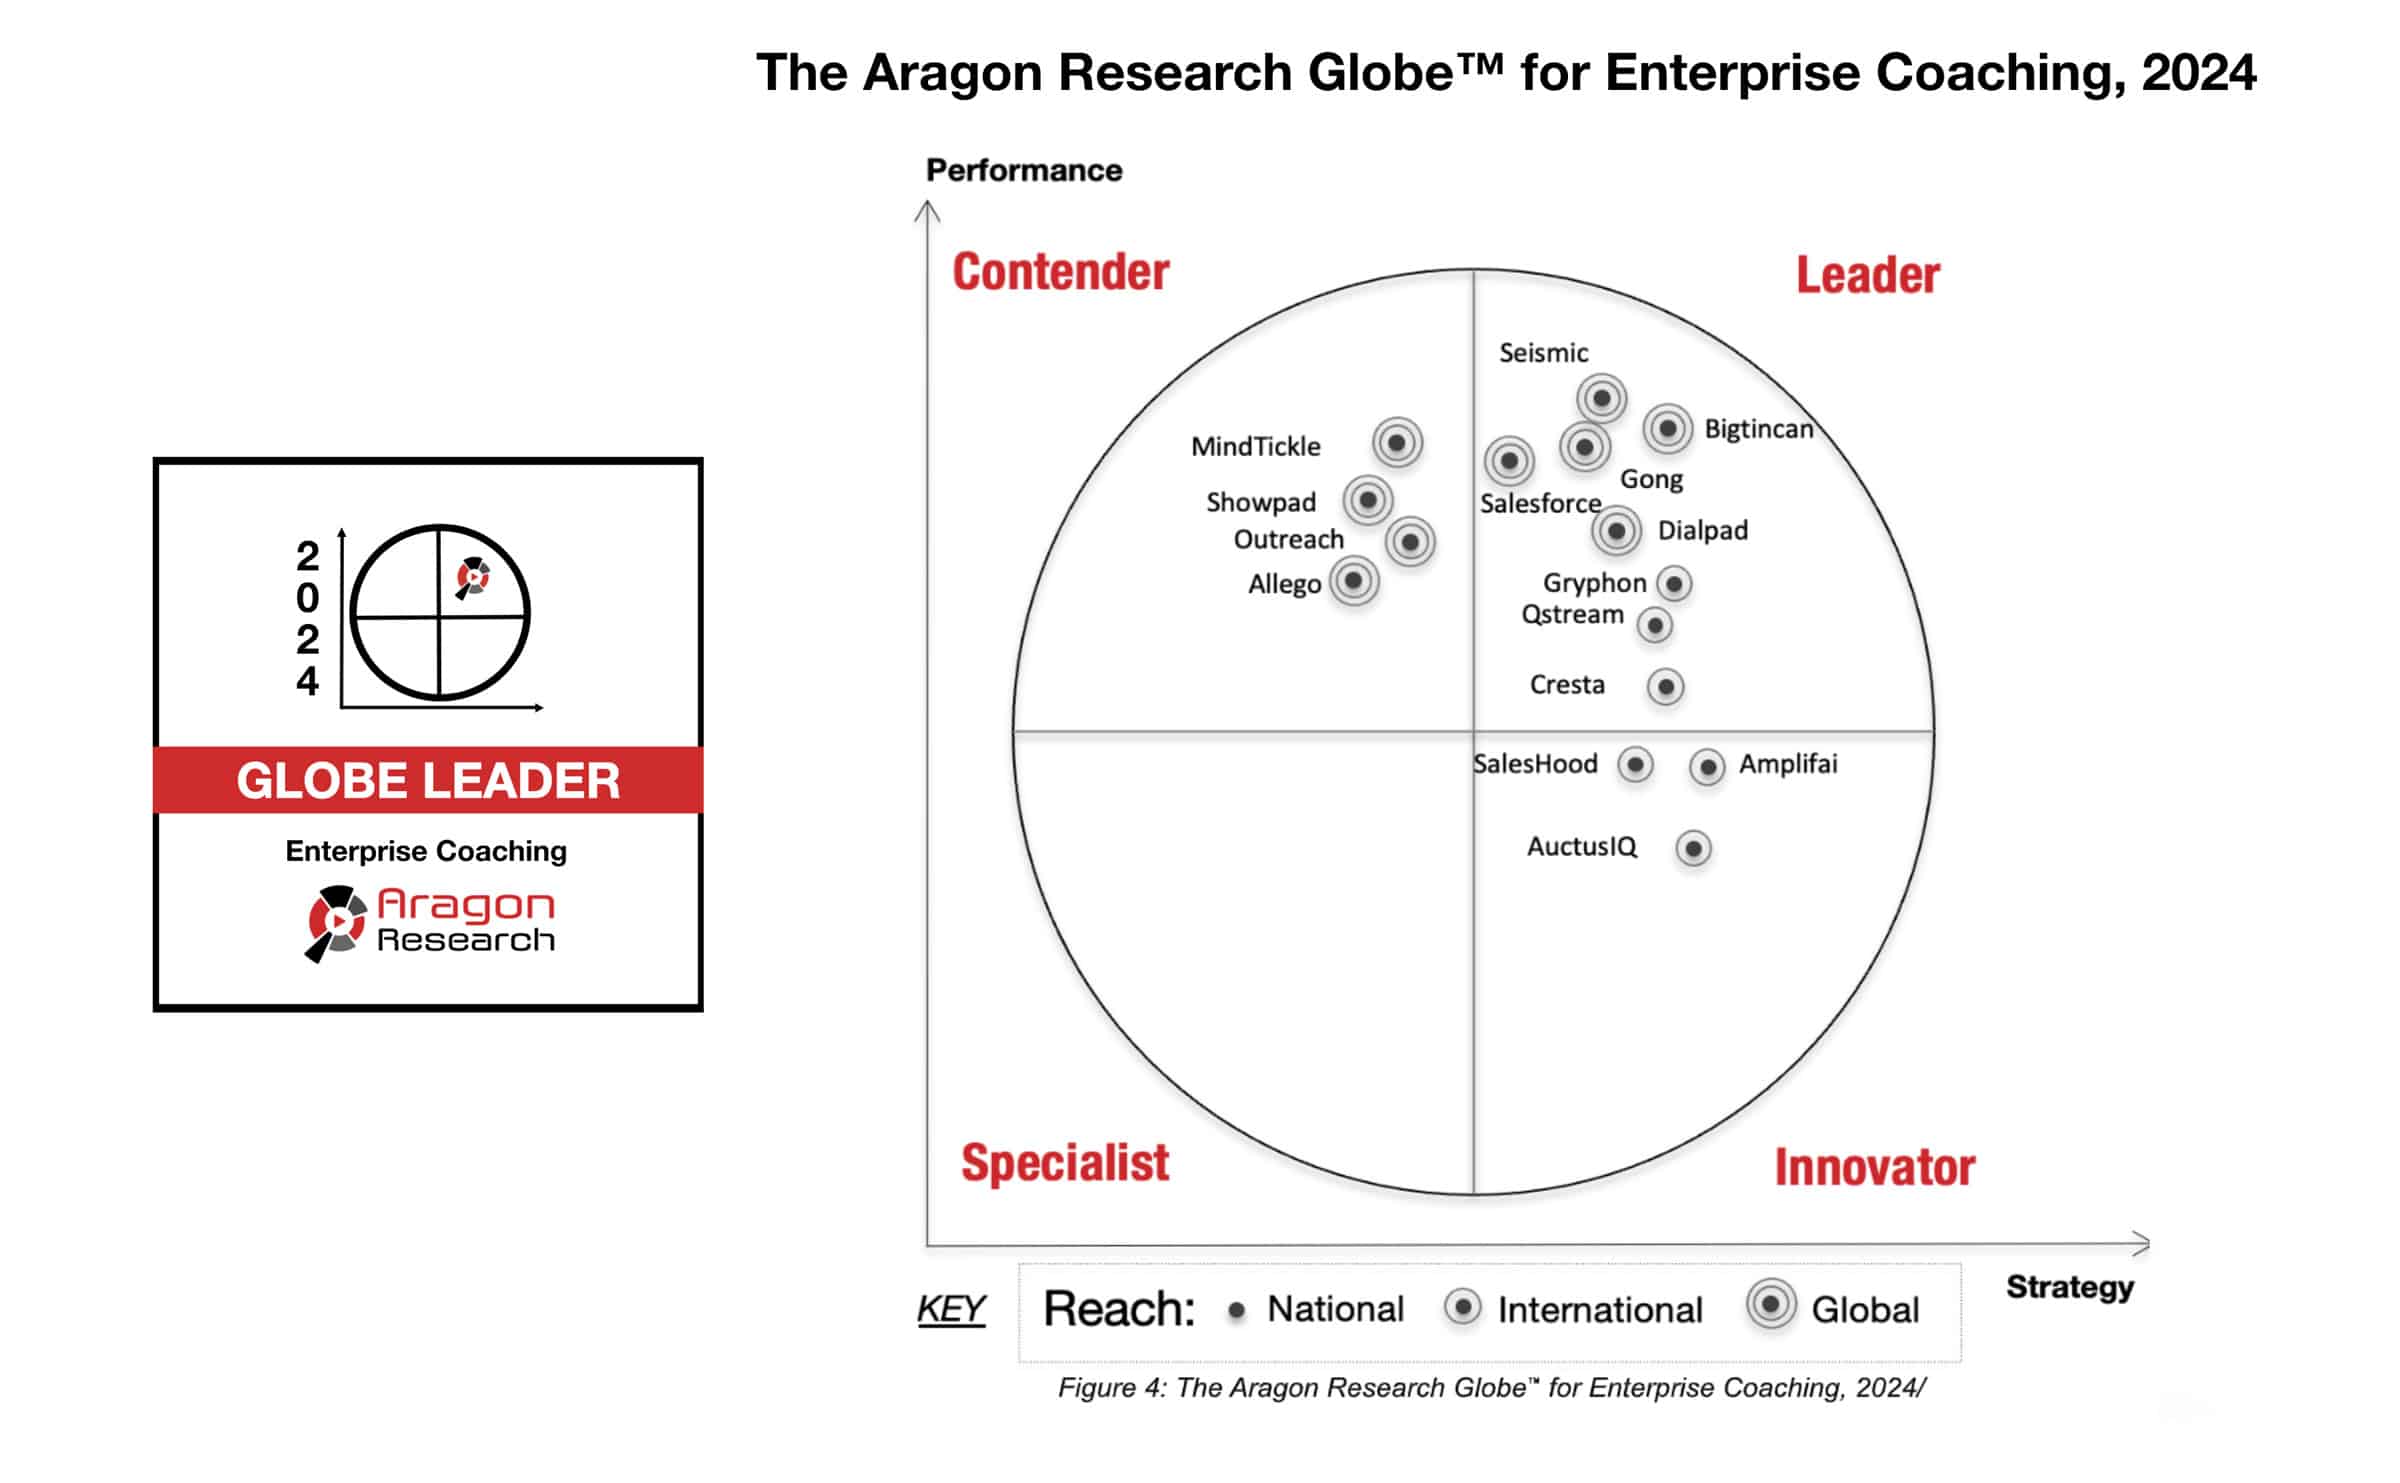 The Aragon Research Globe for Enterprise Coaching, 2024